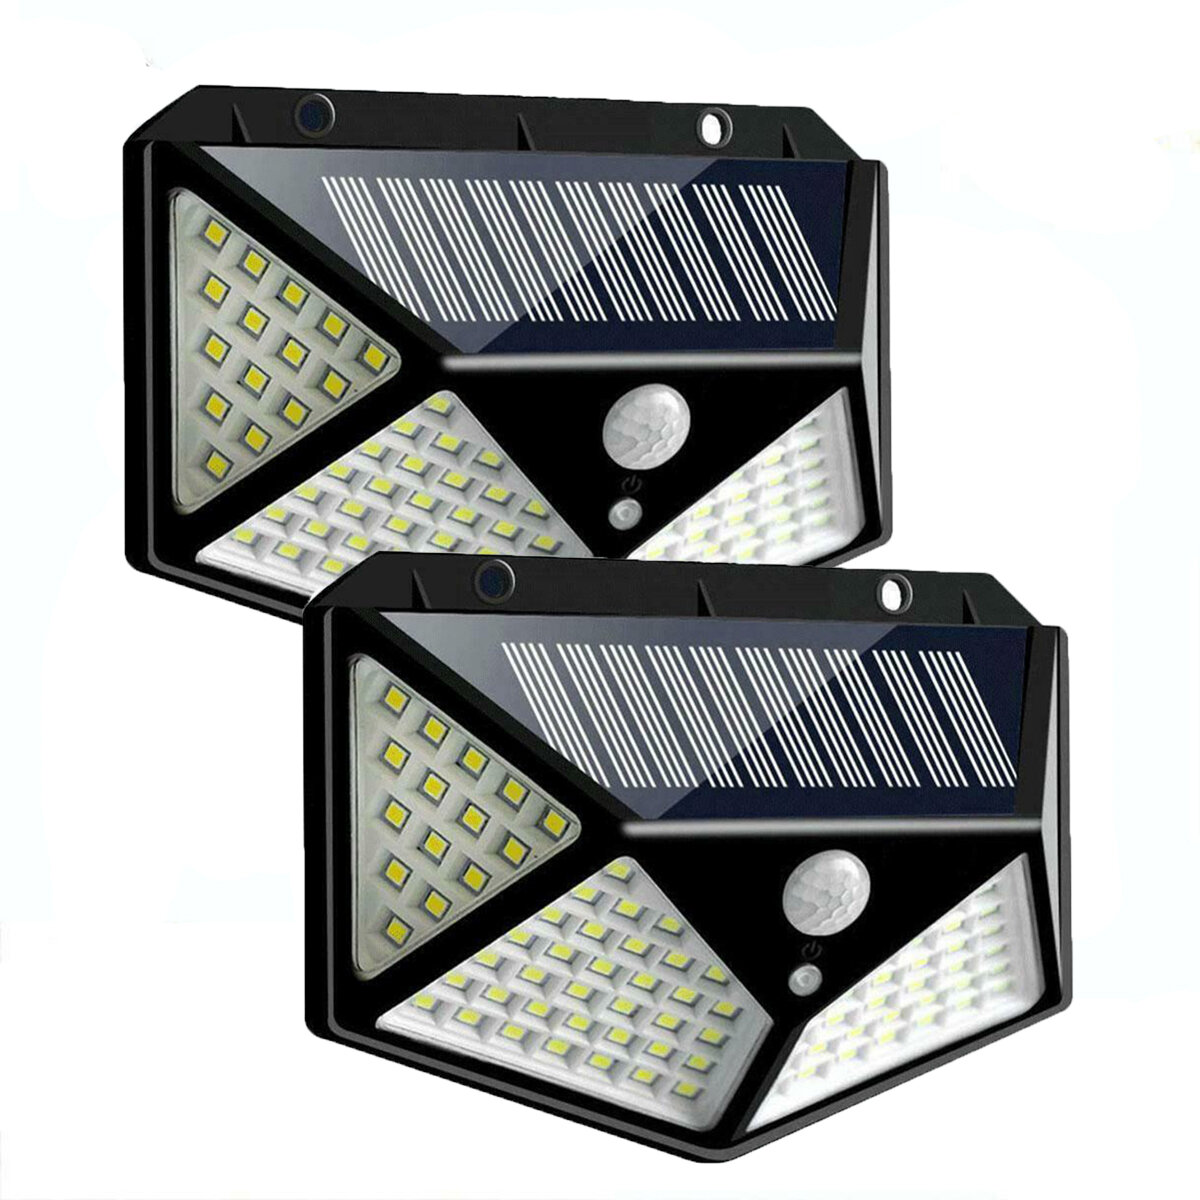 Solar Power Dusk-to-Dawn Sensor Waterproof Security Spot LED Flood Light 2 Pack 